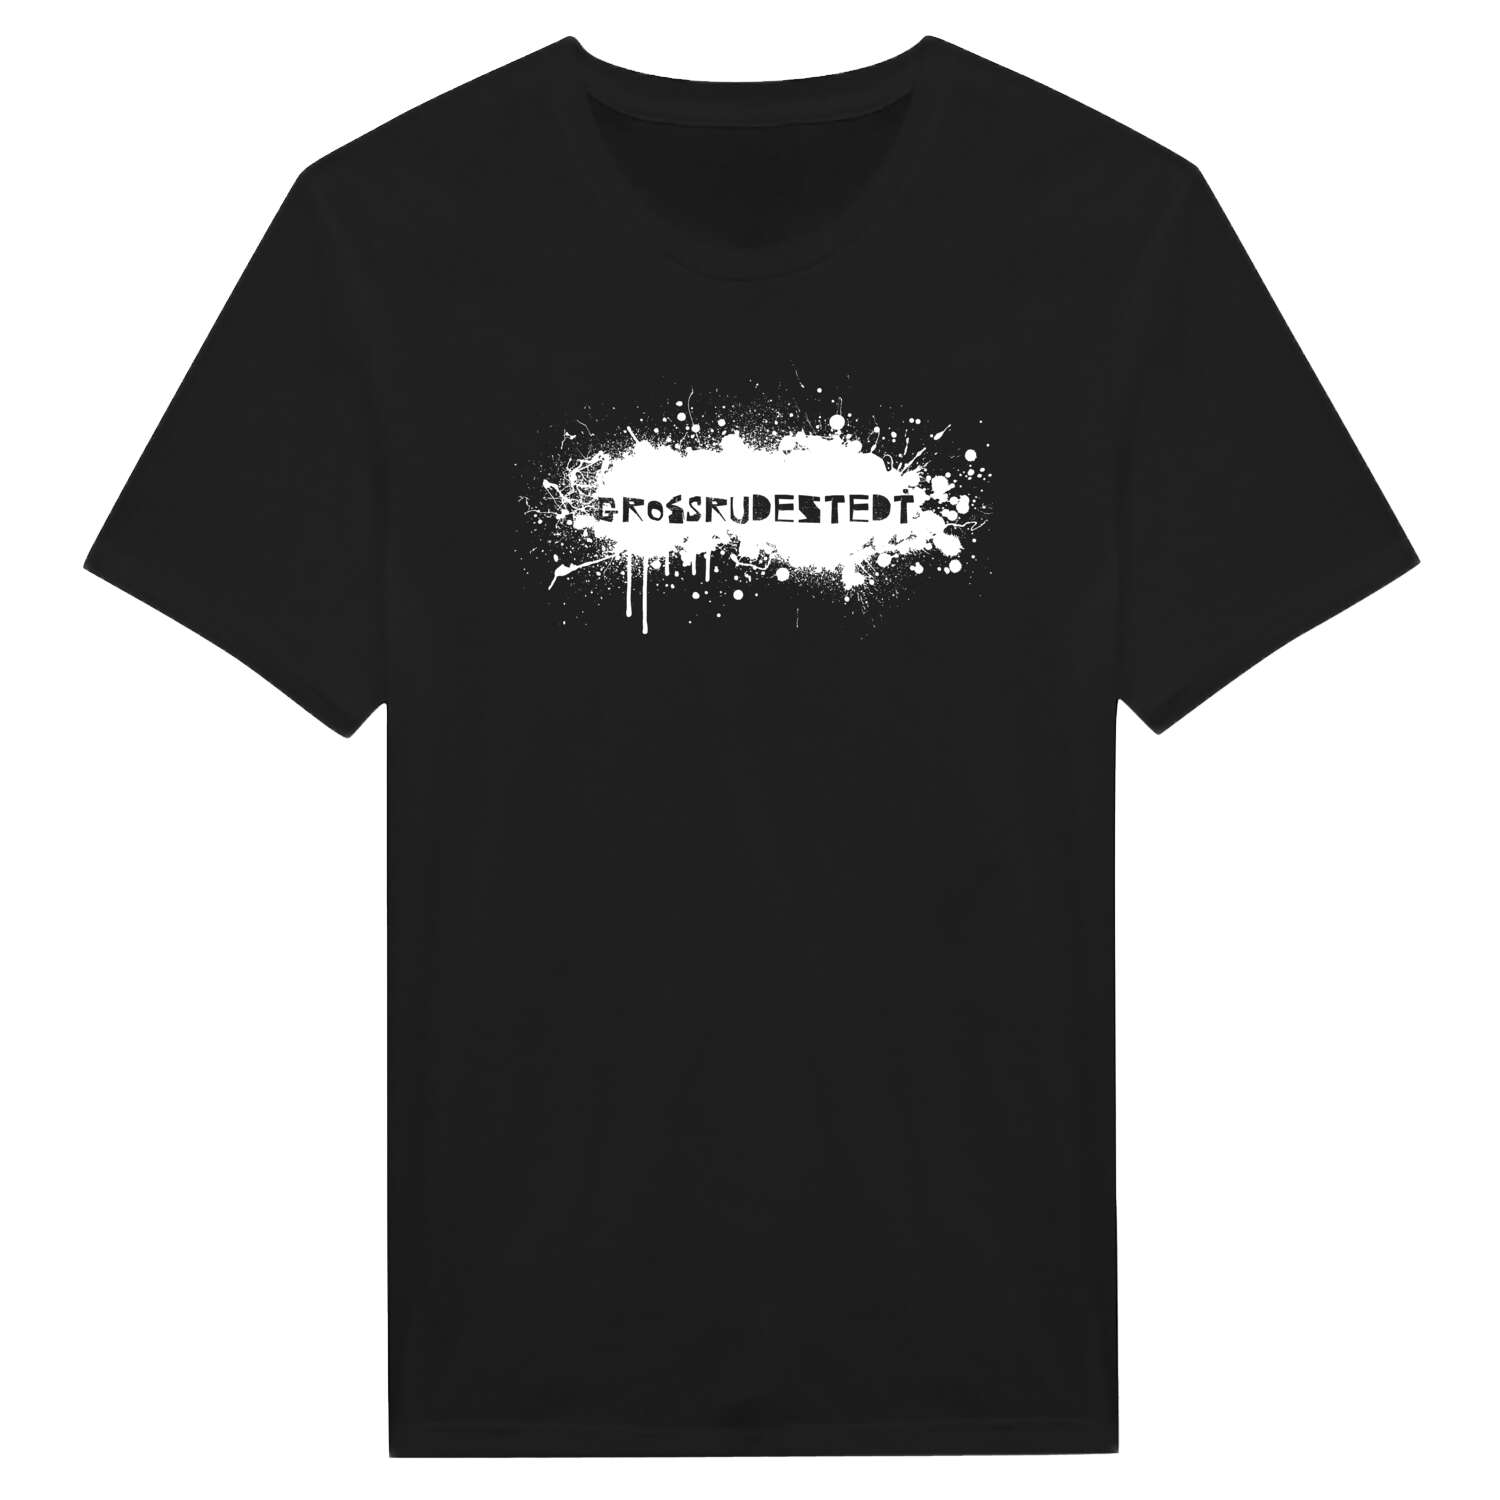 Großrudestedt T-Shirt »Paint Splash Punk«